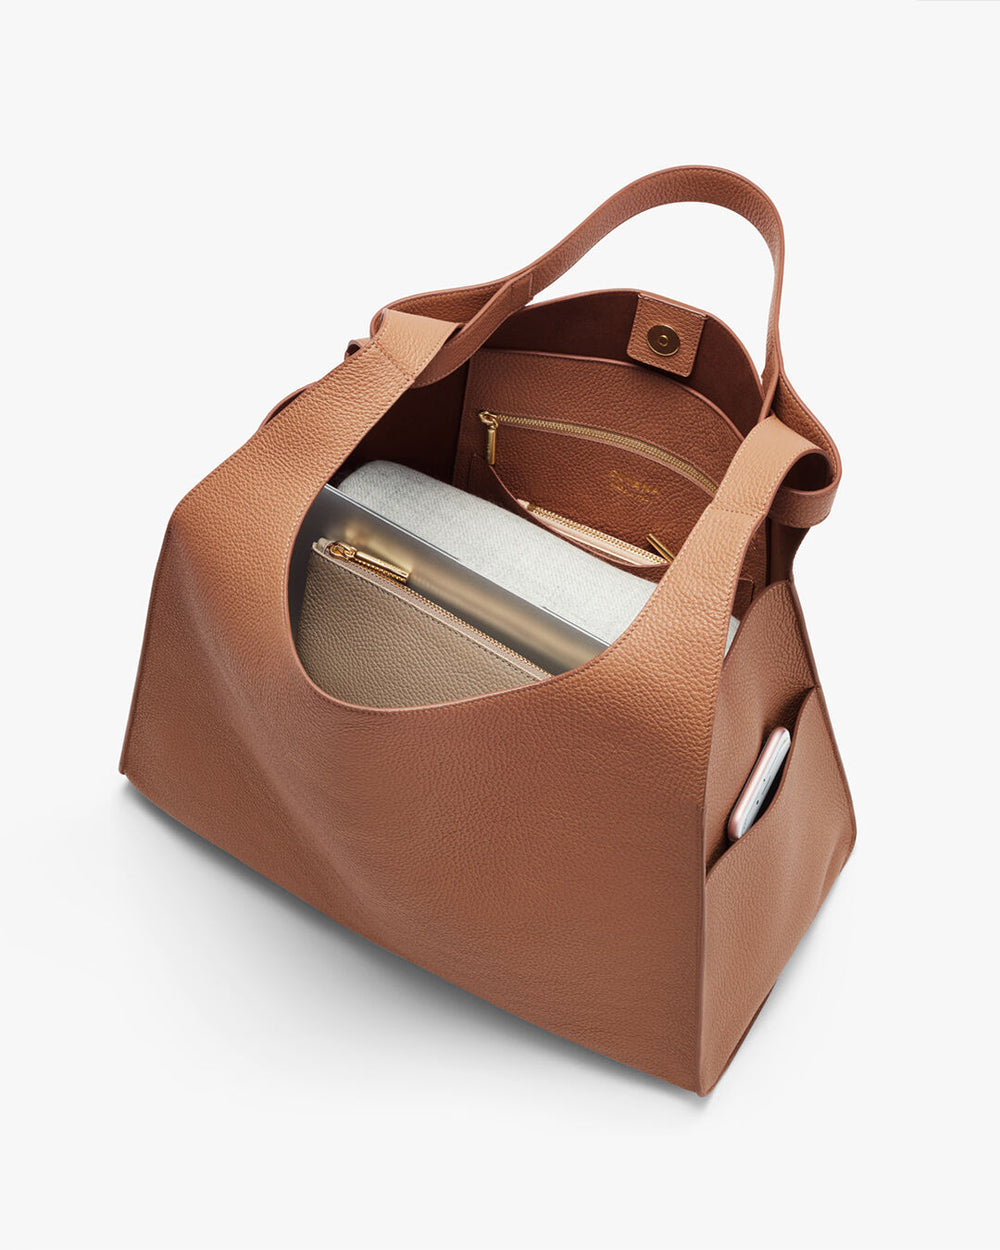 Cuyana Double Loop Bag Review + What's In My Bag 